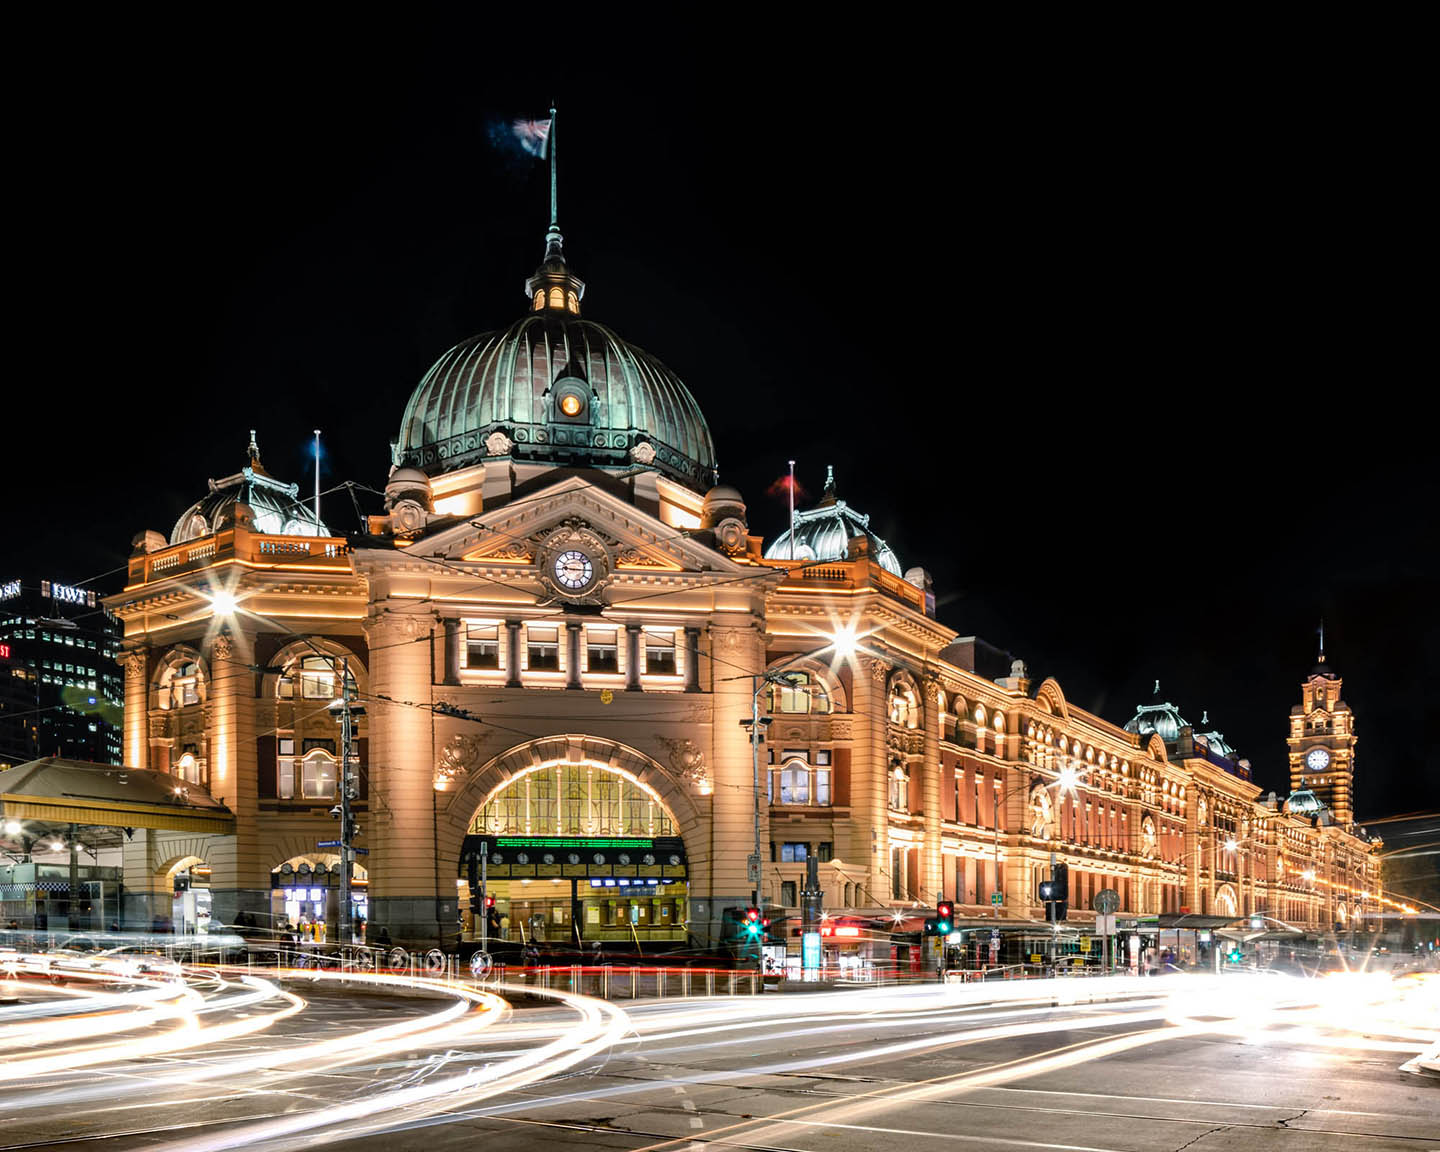 Flinders Street Station, Attraction, Melbourne, Victoria, Australia